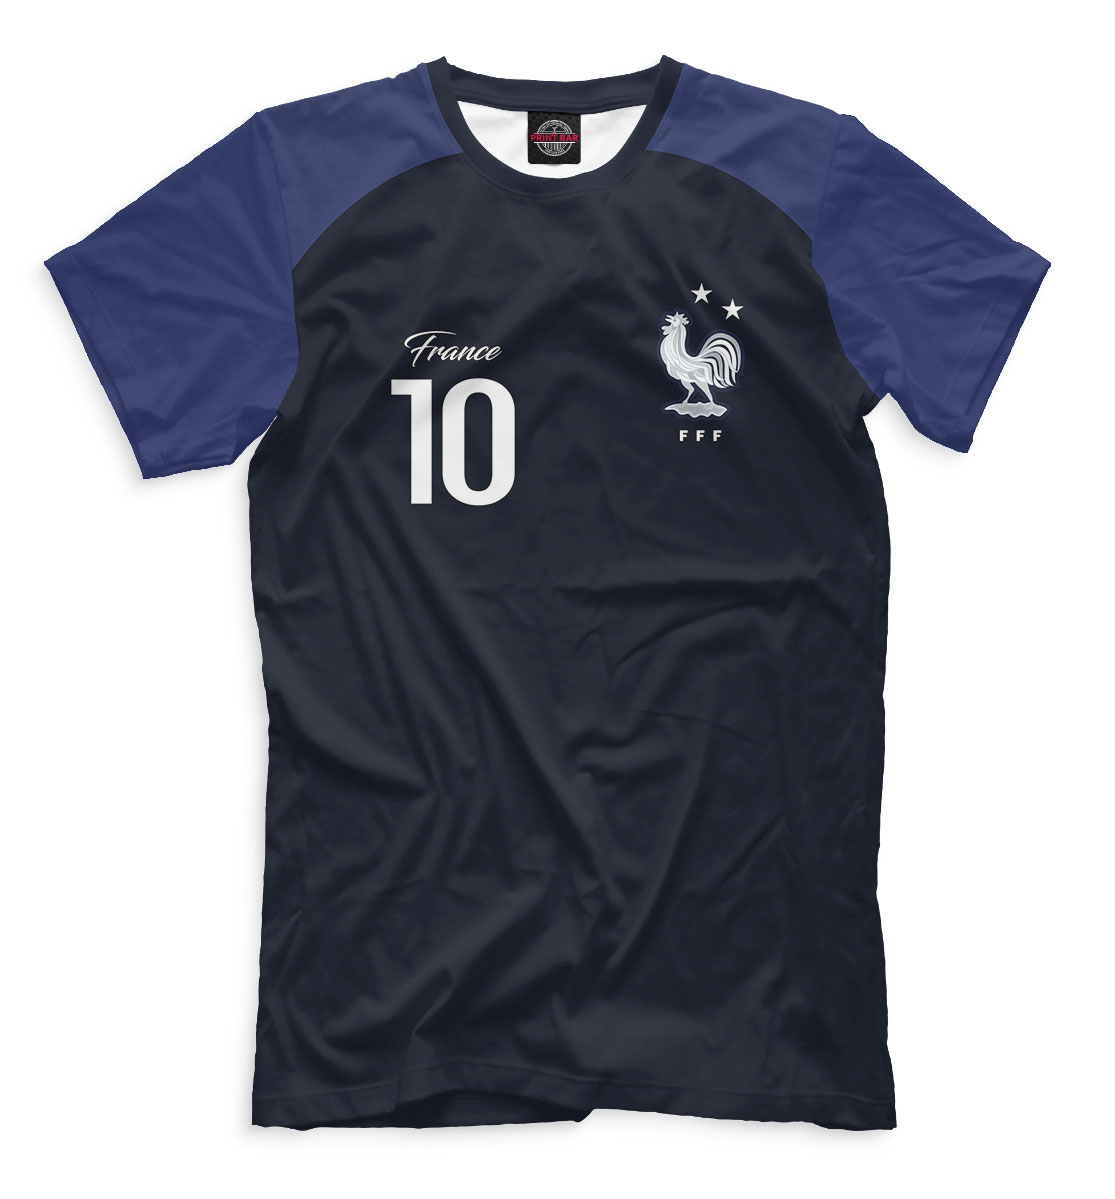 Футболка Килиан Мбаппе - Сборная Франции для мальчиков, артикул: FLT-501746-fut-2mp